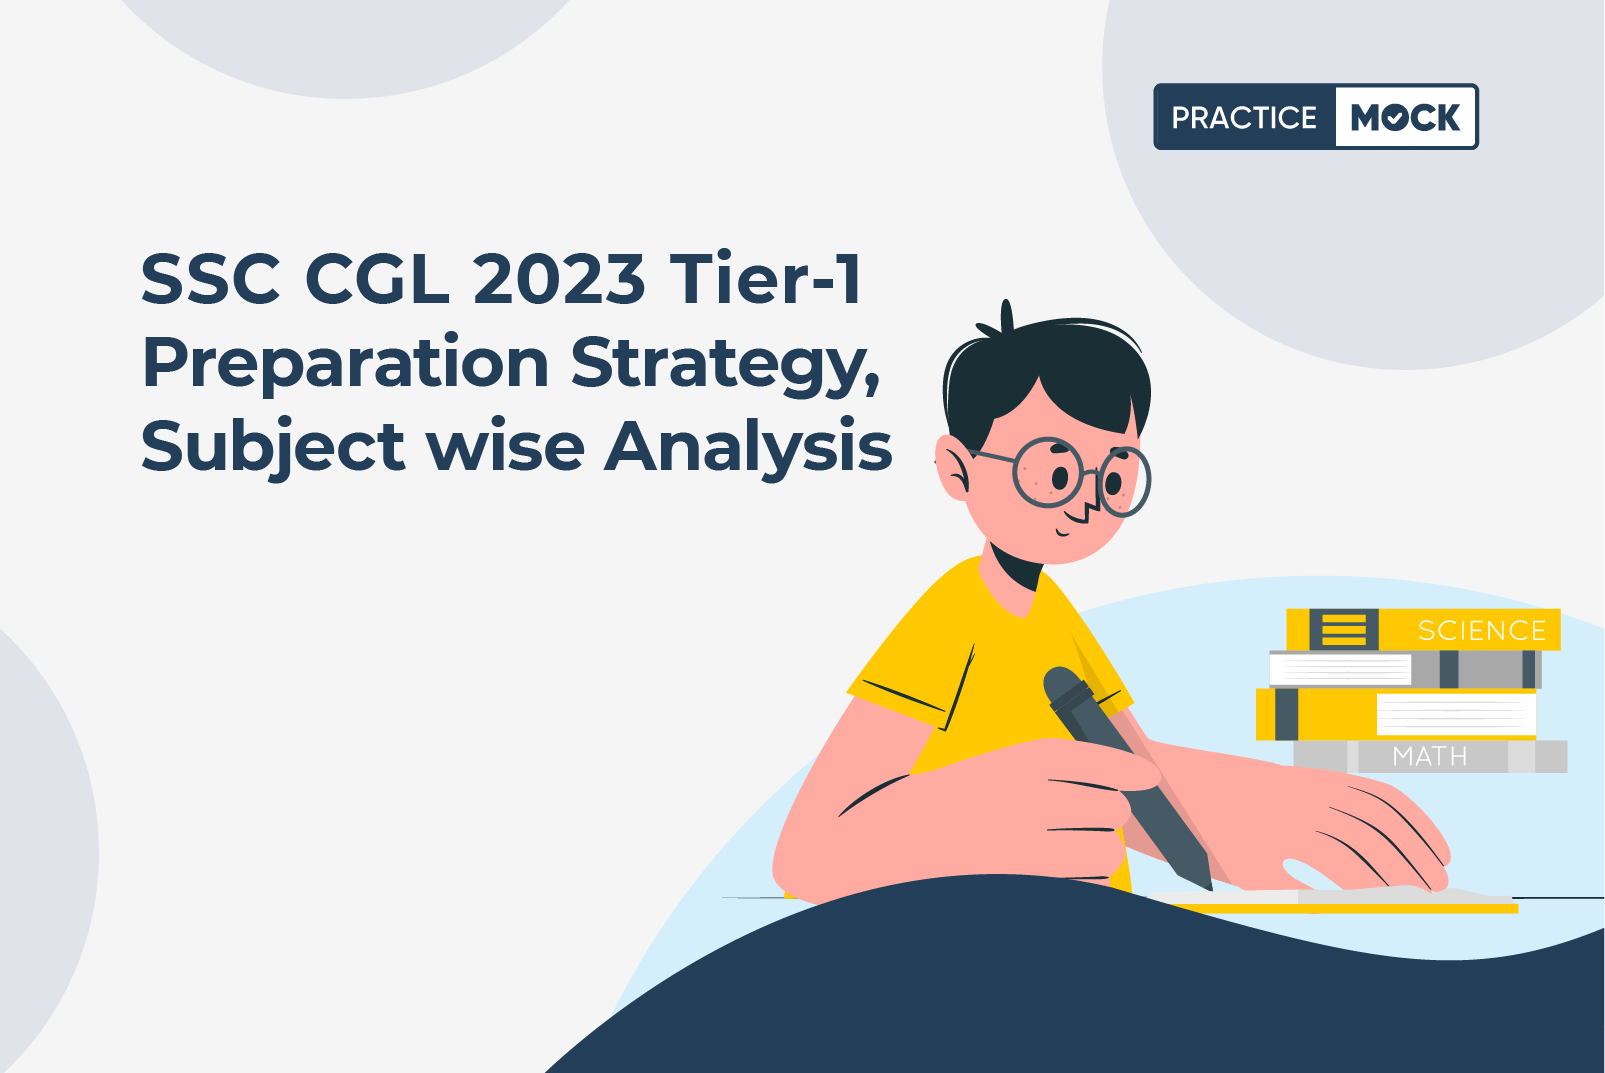 SSC CGL Tier-1 Preparation Strategy 2023